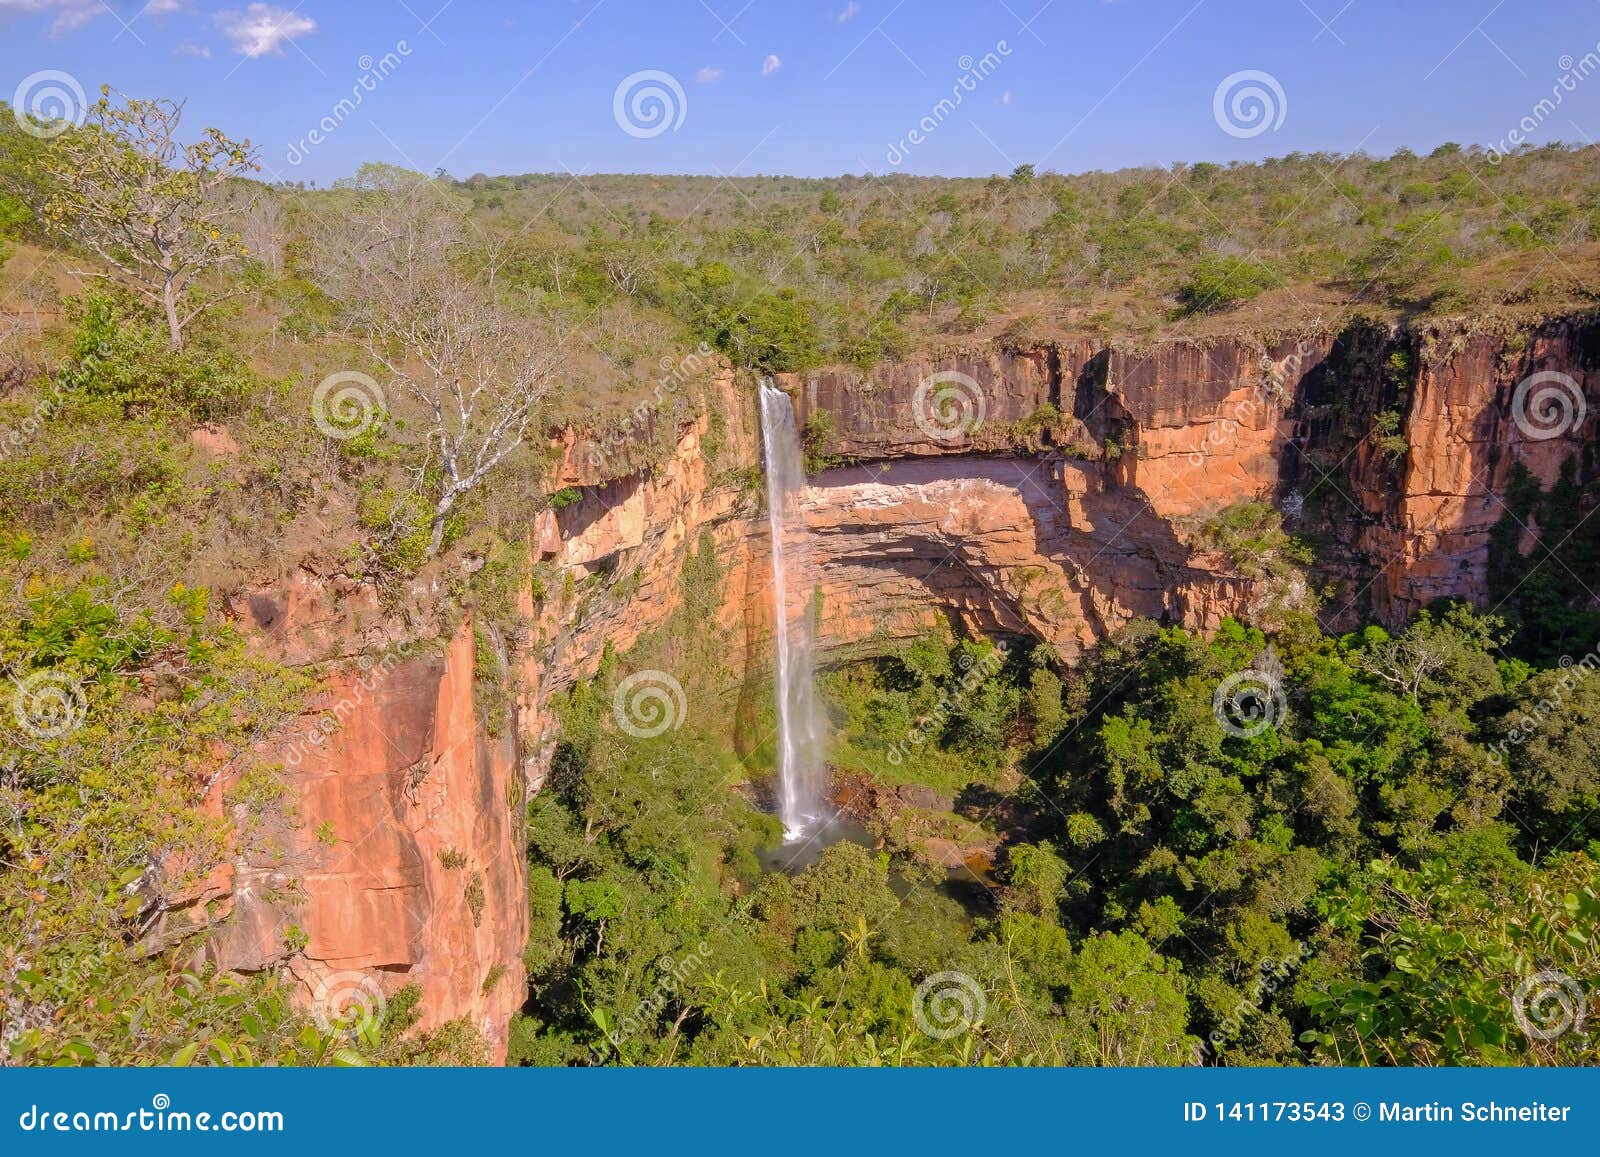 beautiful bridal veil, veu da noiva waterfall in chapada dos guimaraes national park, cuiaba, mato grosso, brazil